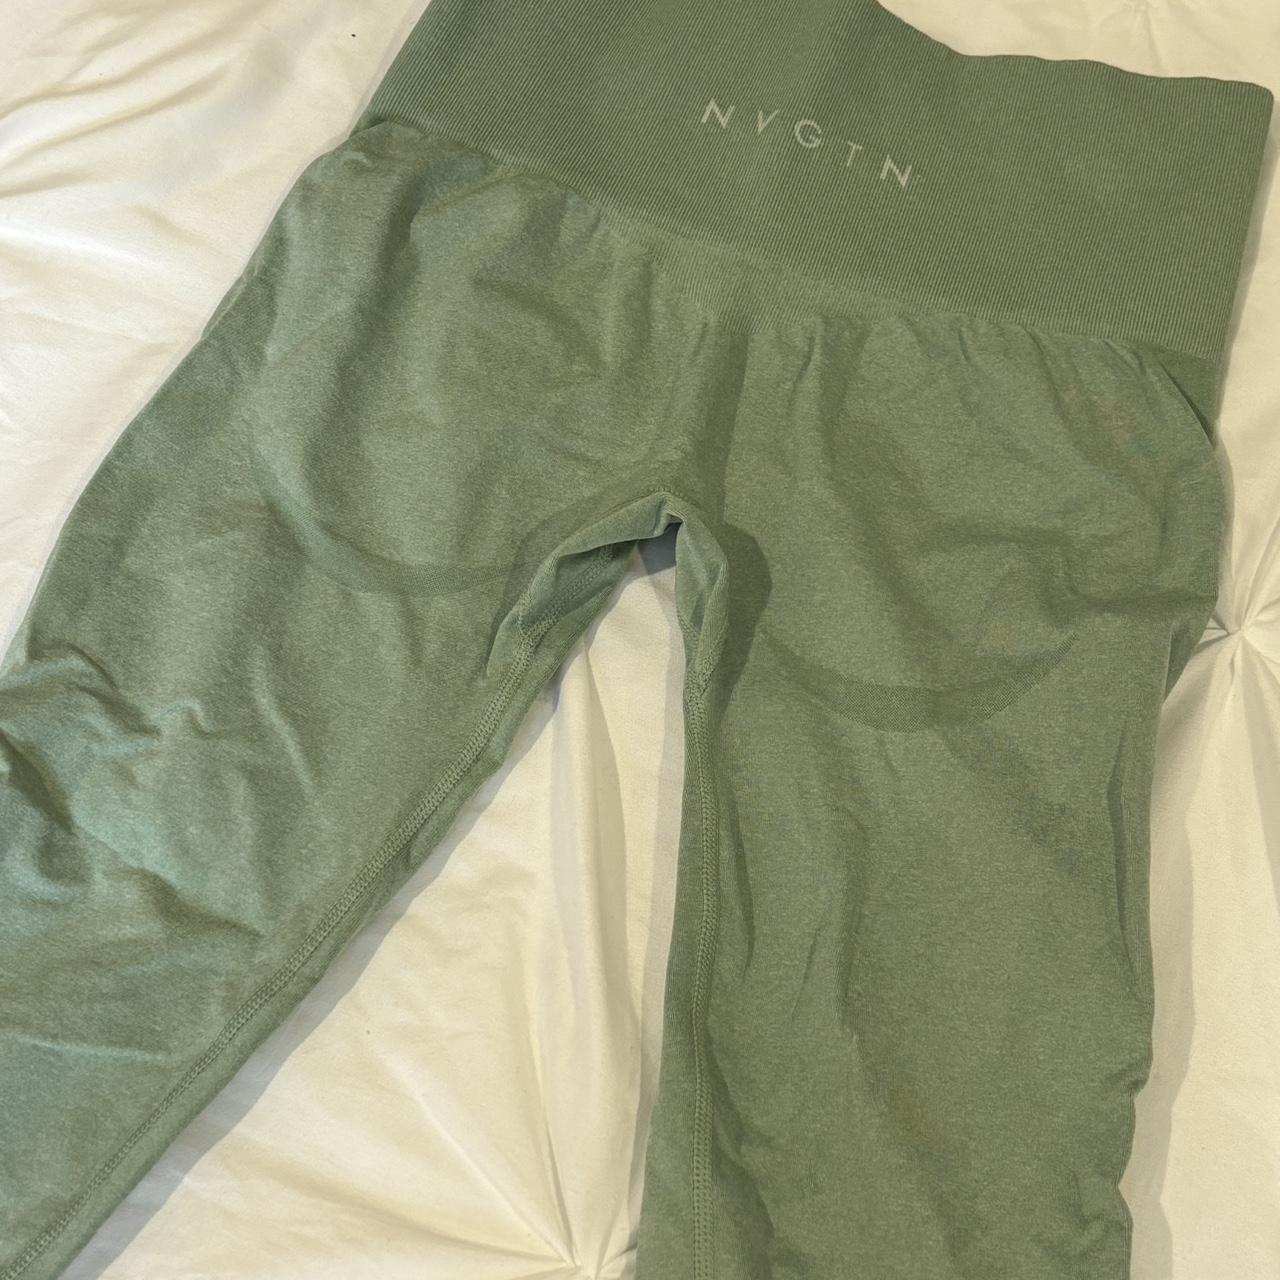 NVGTN Khaki Green Leggings - $53 - From Kayleigh